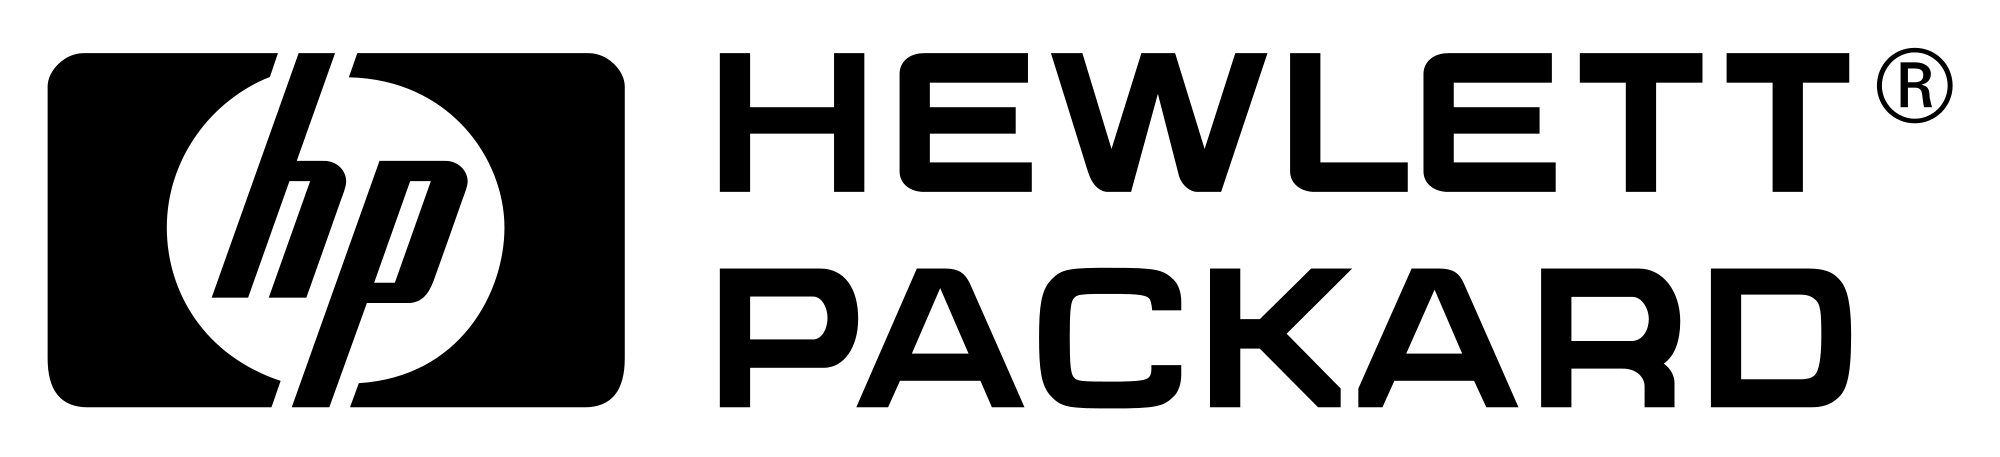 New Hewlett Packard Logo - File:Hewlett Packard old Logo black.svg - Wikimedia Commons